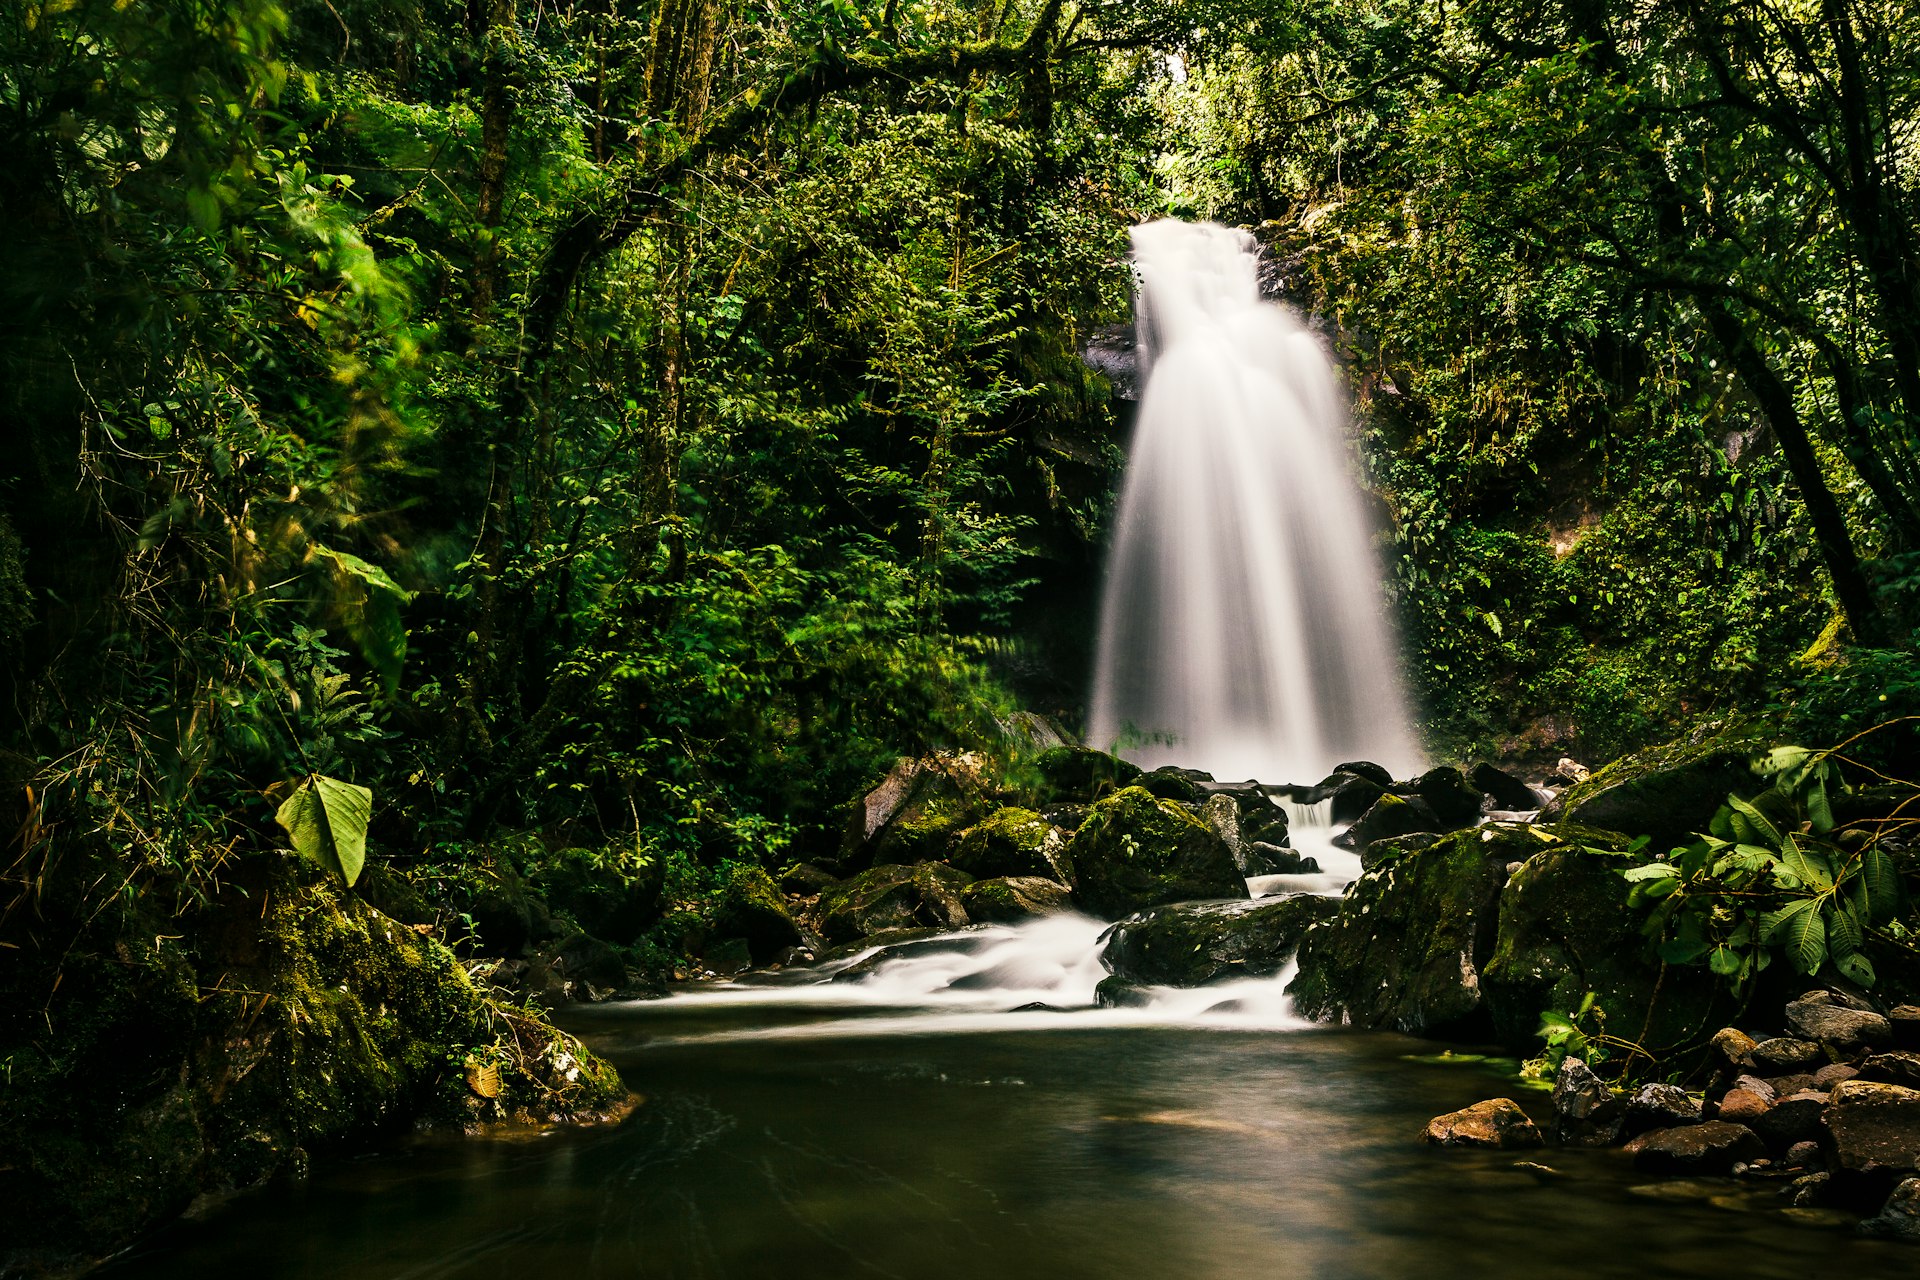 A beautiful mountain stream in the jungle forests near Boquete, Panama